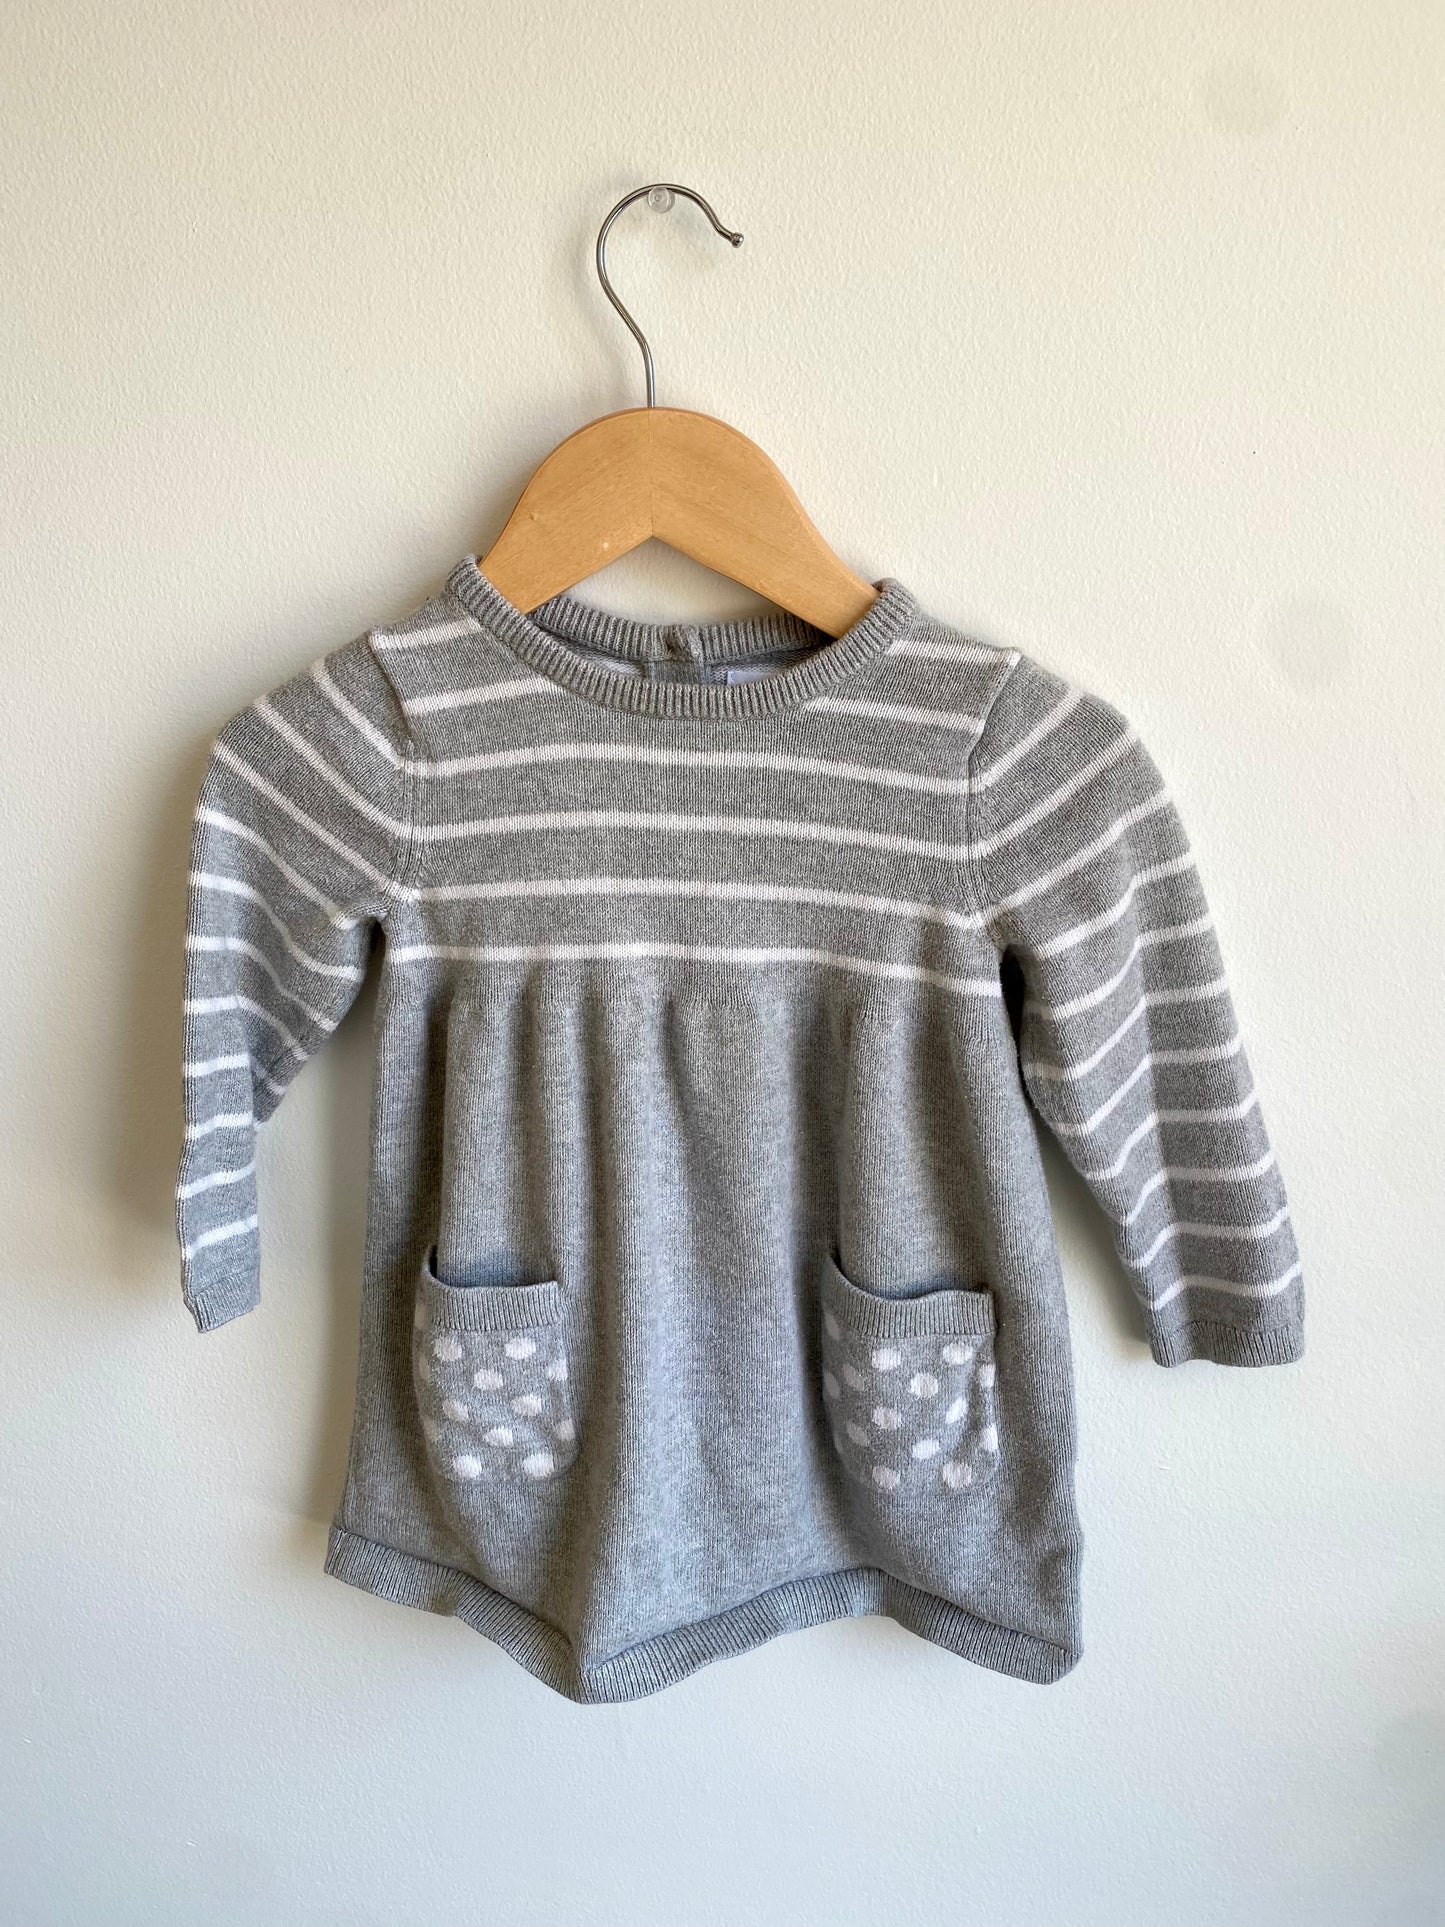 Grey Striped Sweater Dress / 18-24m